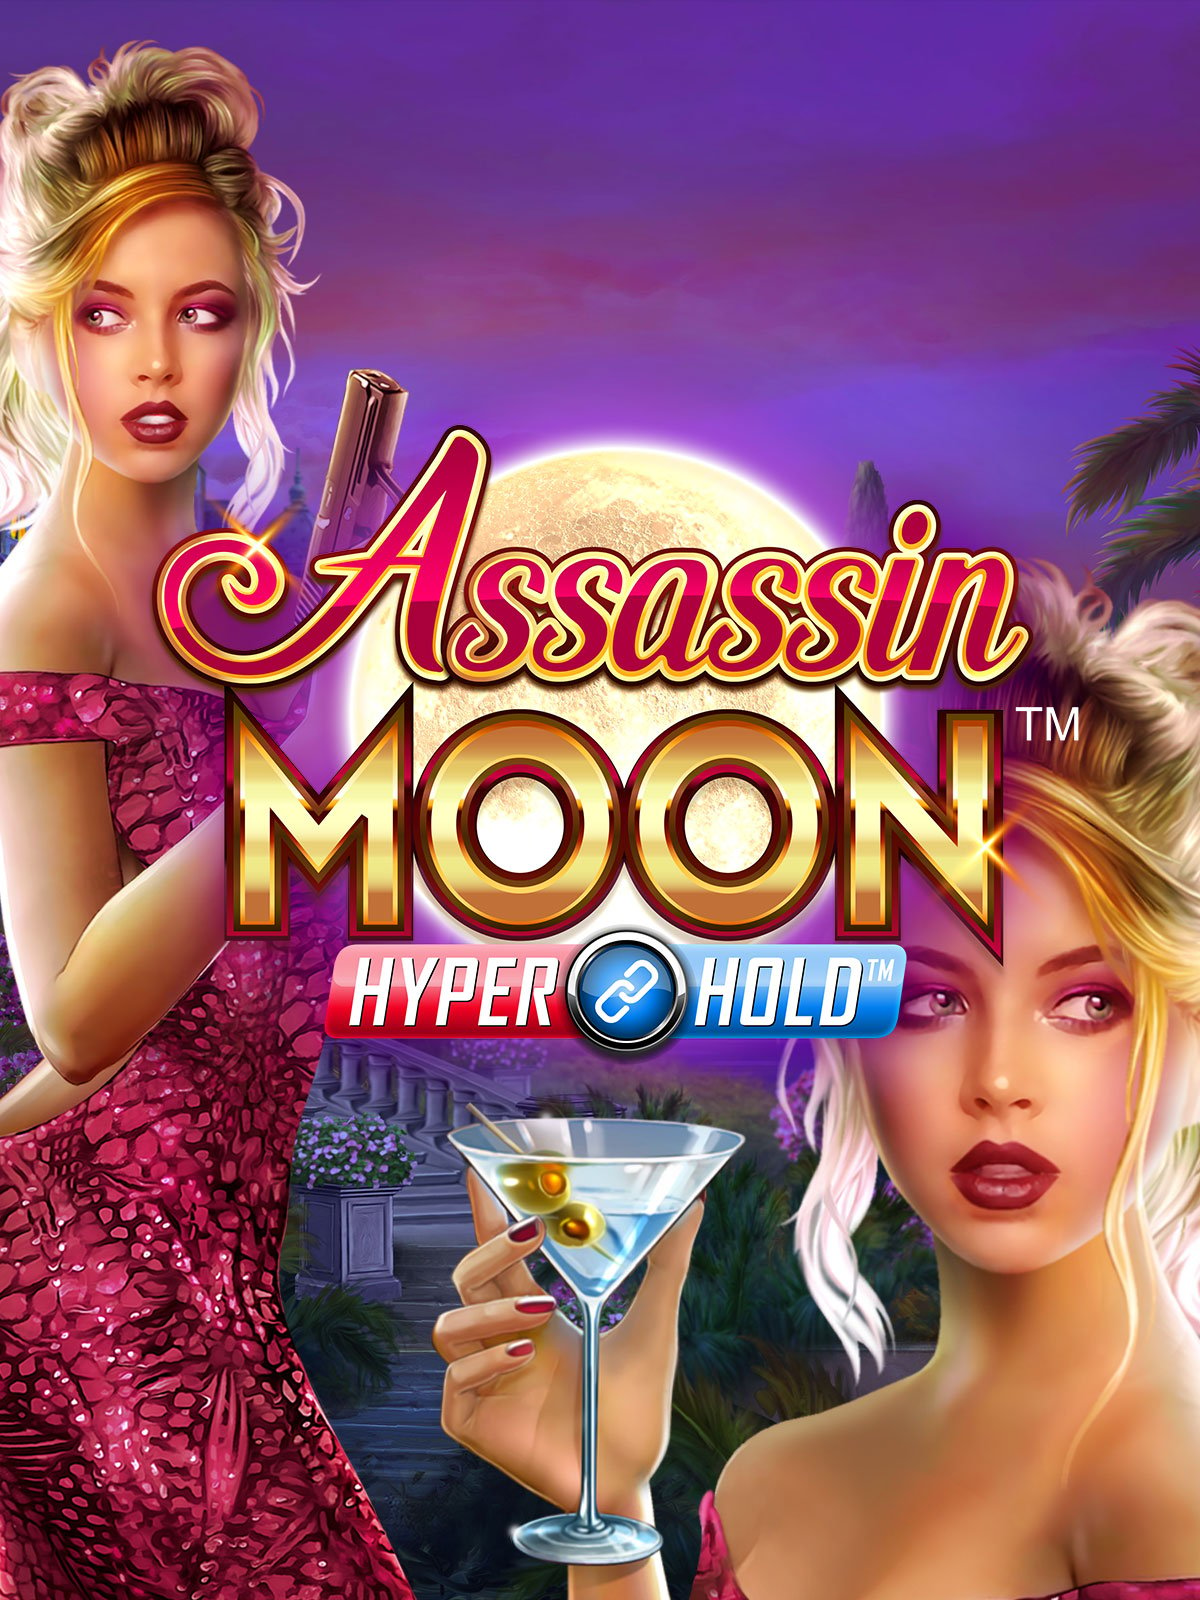 Assassin Moon online slot game